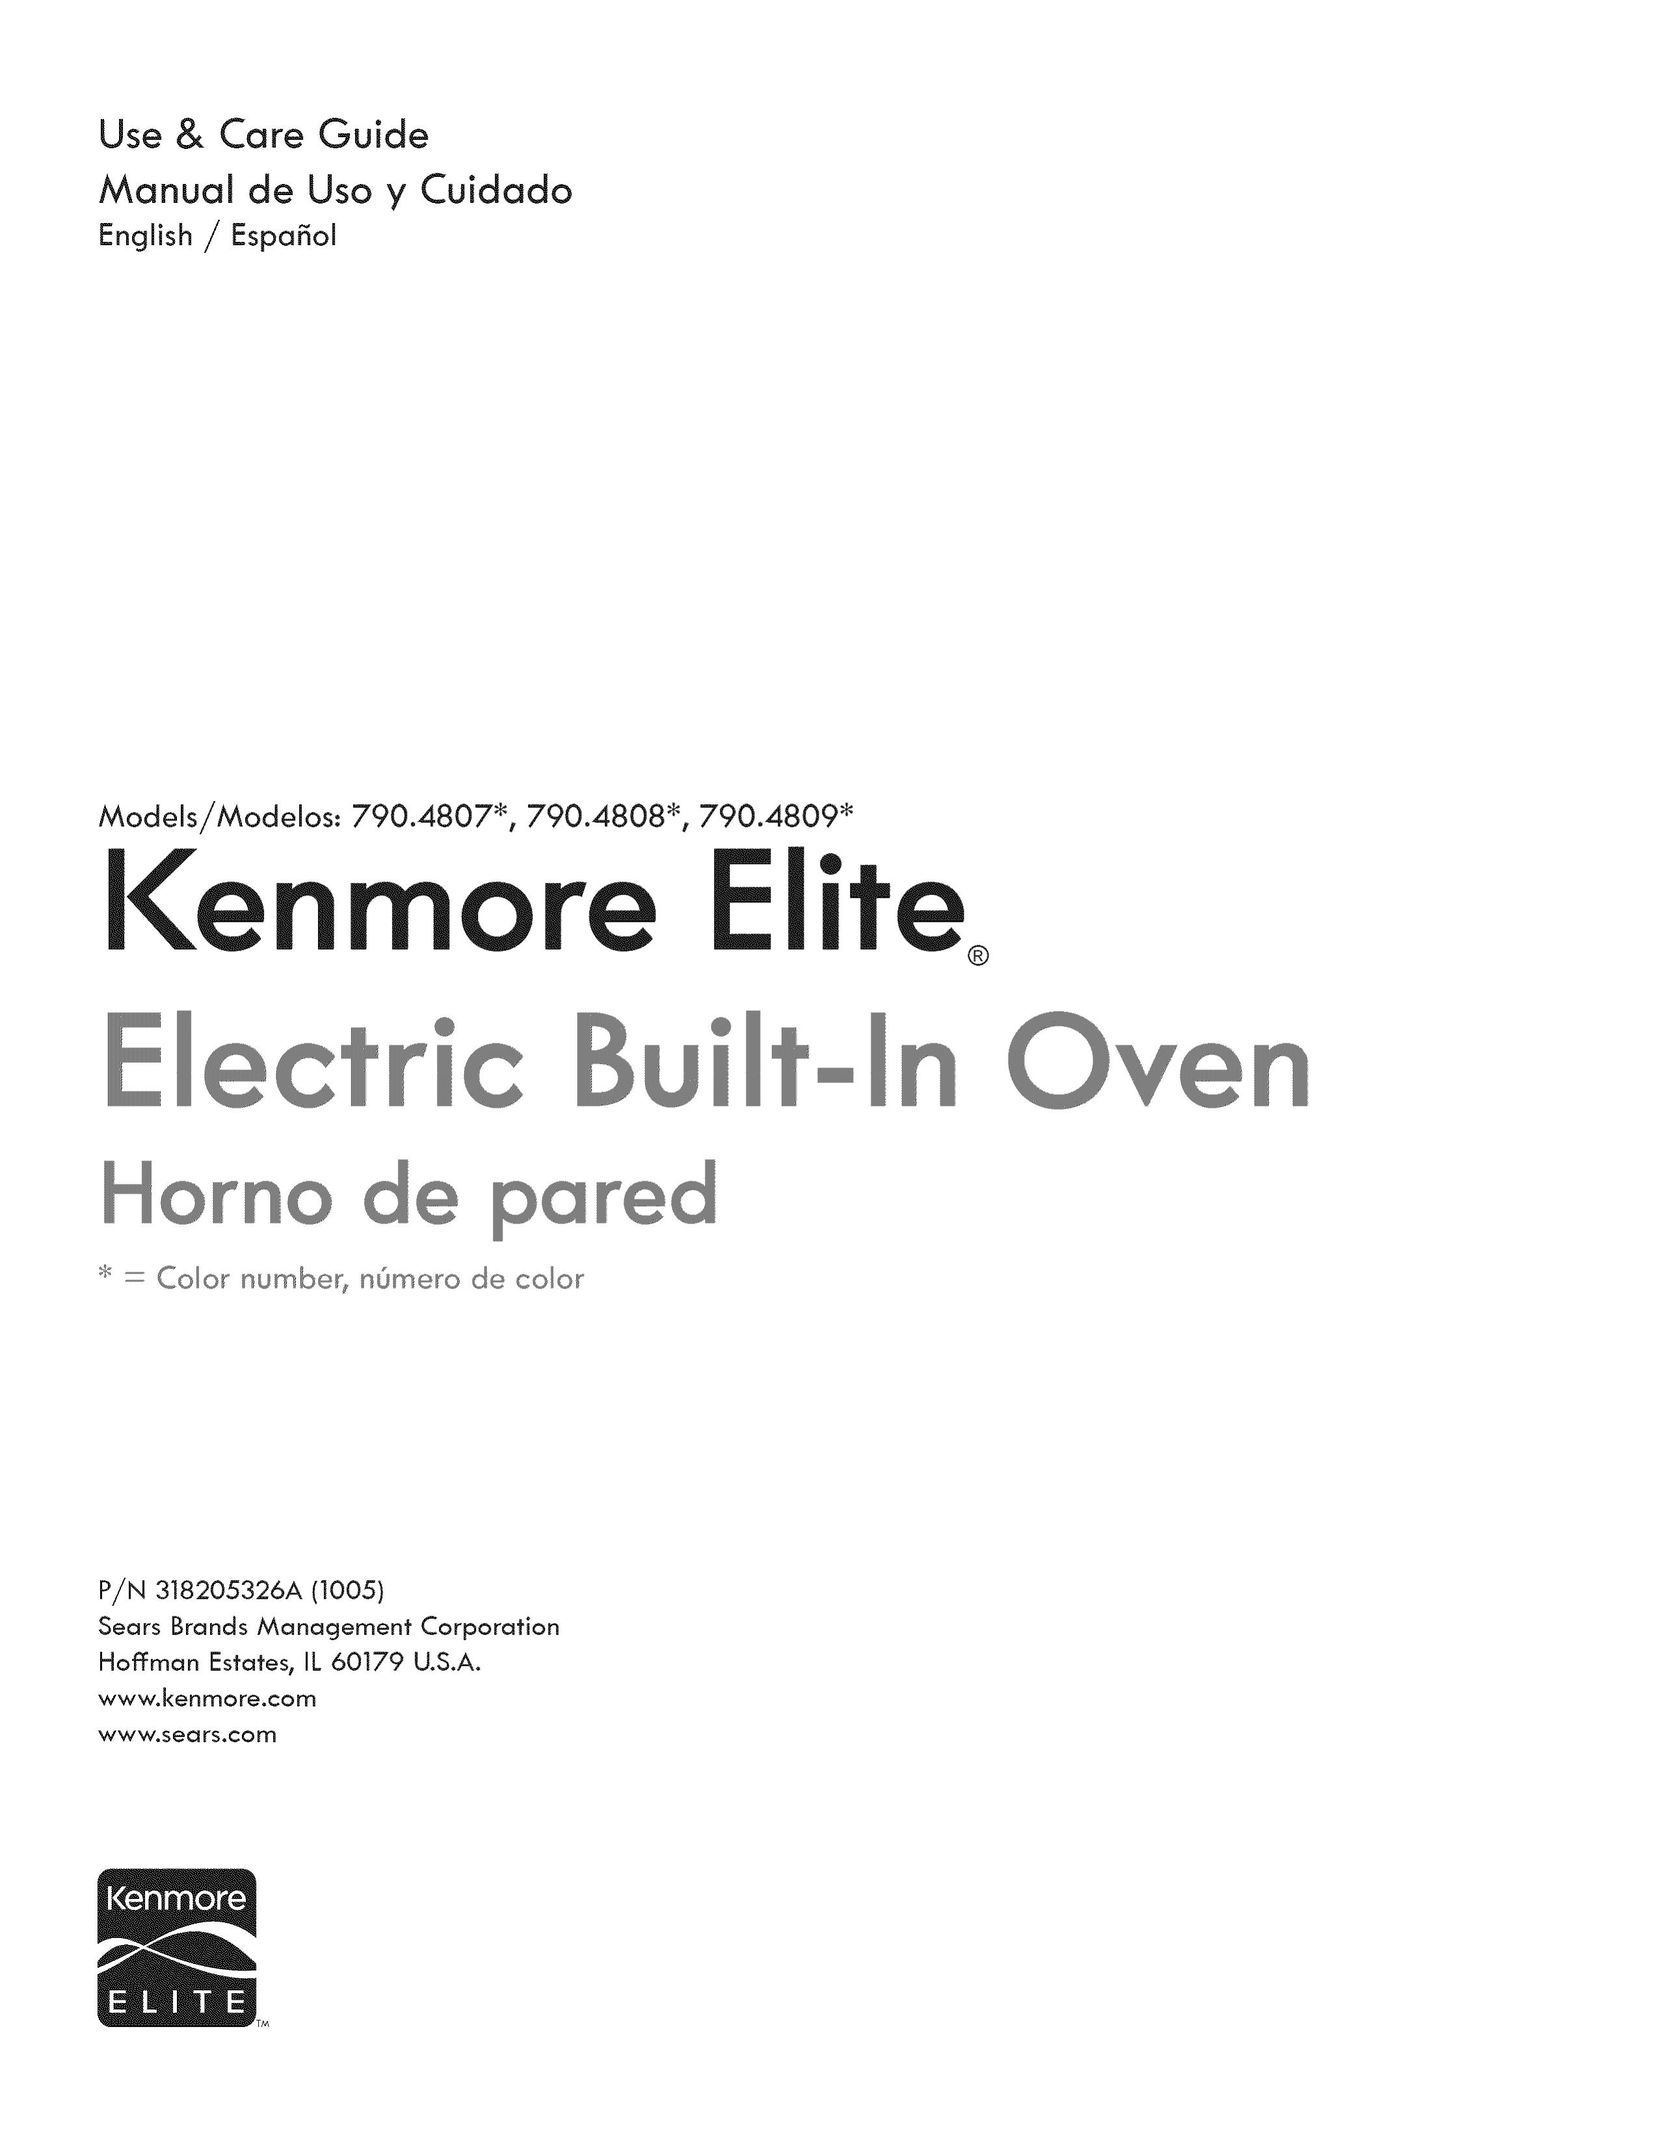 Kenmore 790.4808 Oven User Manual